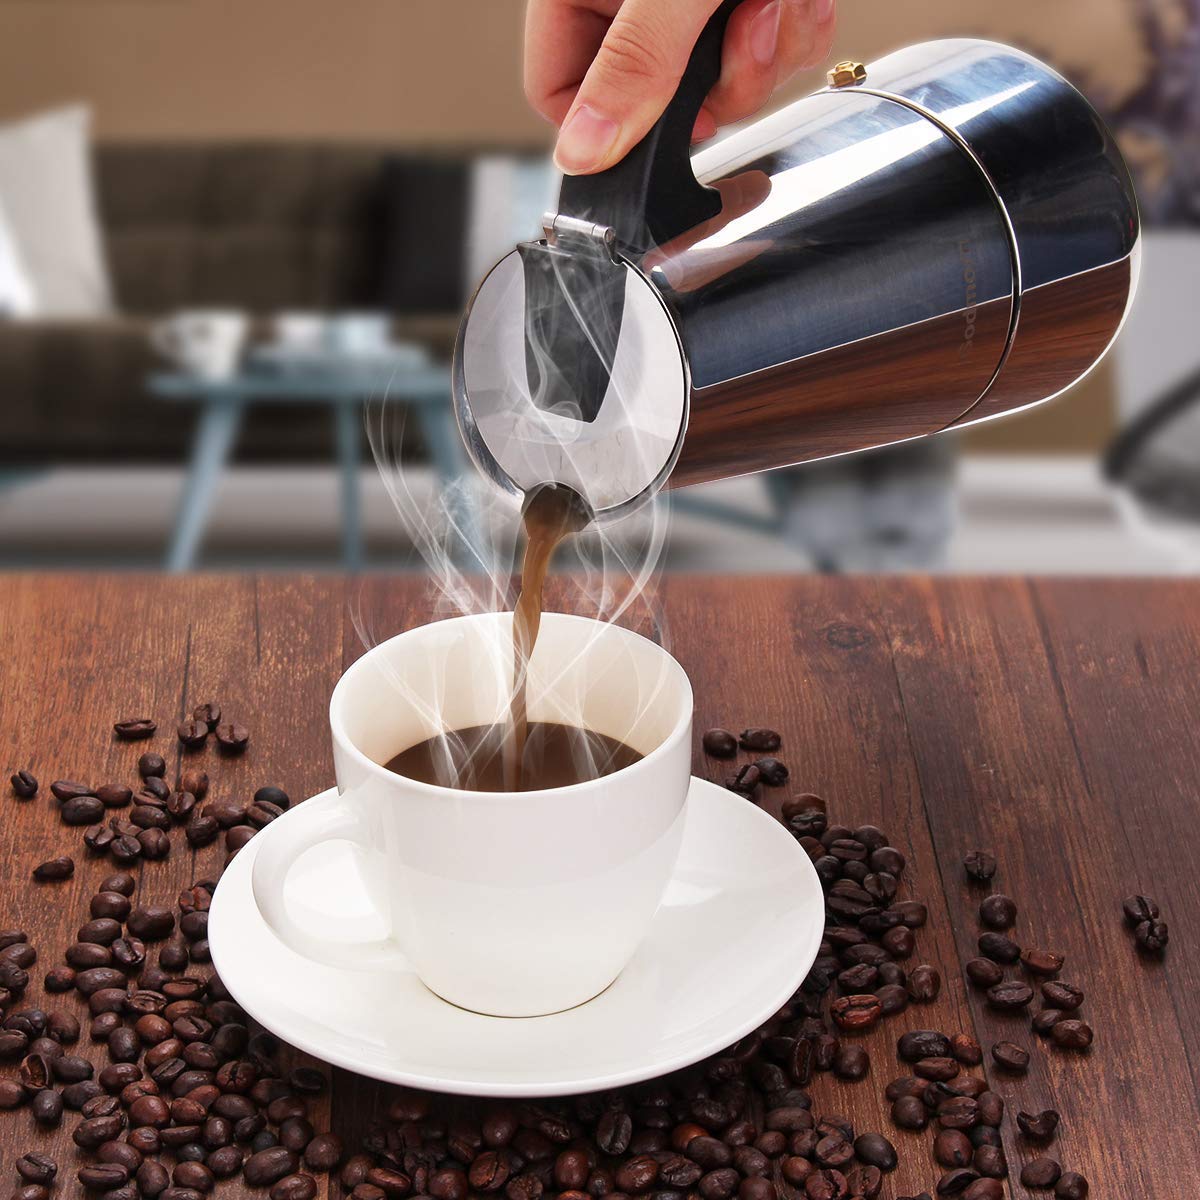 Godmorn-Stovetop-Espresso-Maker-Moka-Pot-450ml15oz9-cup-Classic-Cafe-Percolator-Maker-Stainless-Stee-1736605-6